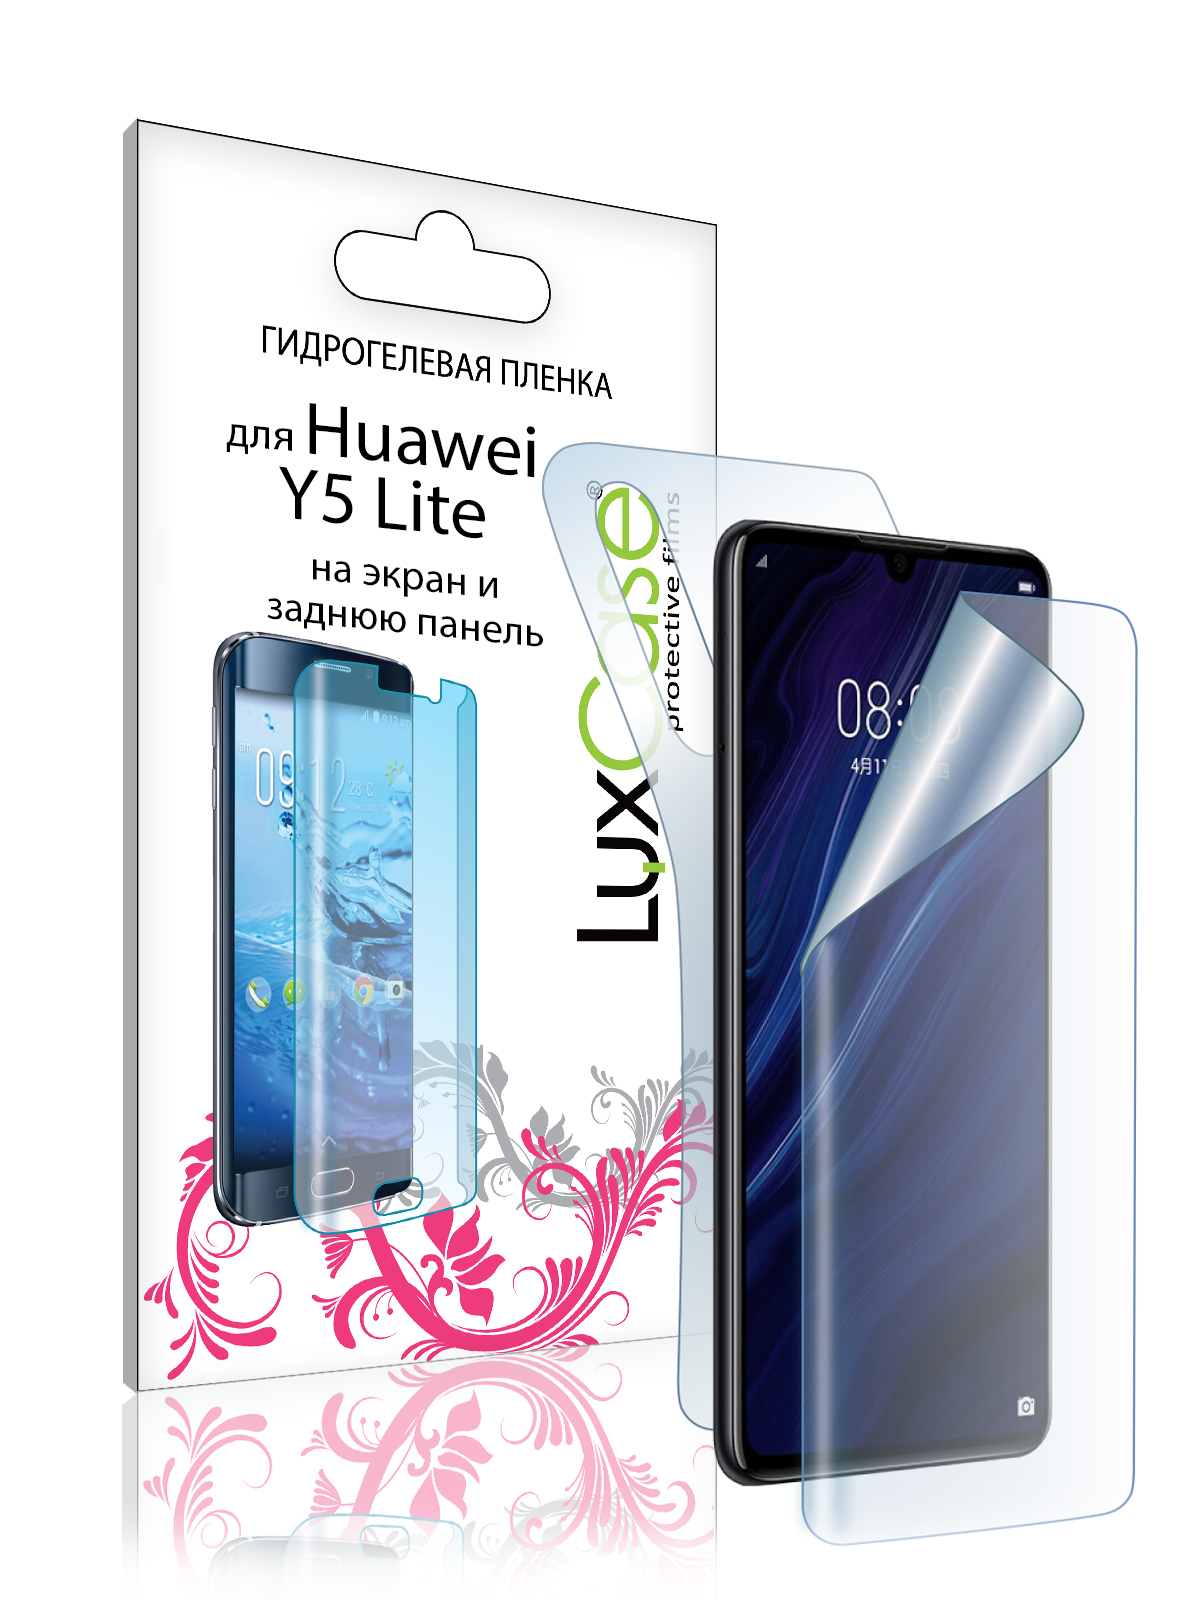 Пленка гидрогелевая LuxCase для Huawei Y5 Lite 0.14mm Front and Back Transperent Huawei Y5 Lite гидрогелевая защитная пленка антишпион anty spy анти шпион для huawei enjoys 8e lite матовая